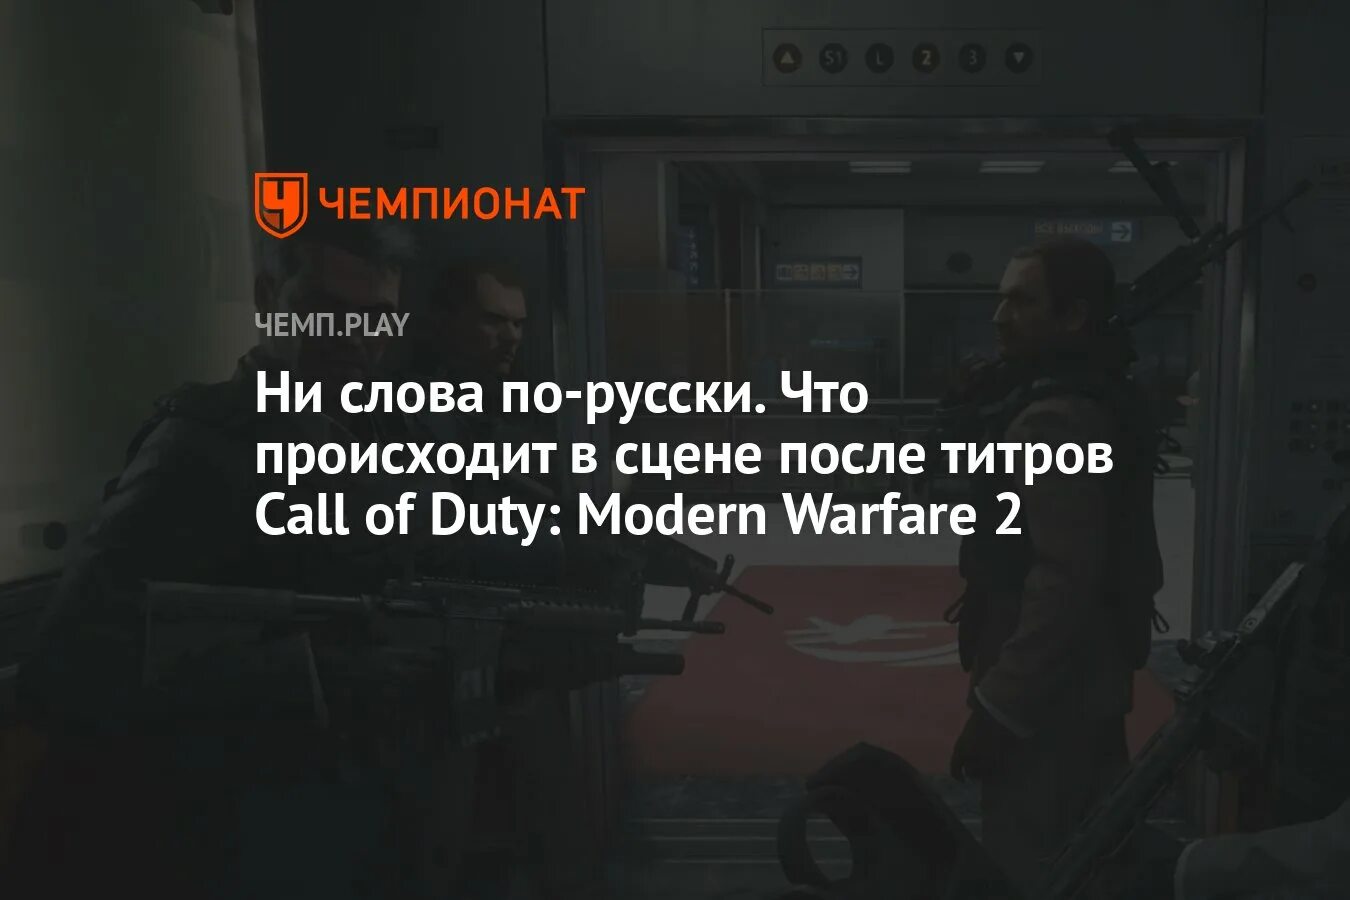 Она не сказала ни слова. И помните ни слова по русски. Call of Duty Modern Warfare 2 концовка. Не слова по русски. Магическая битва сцены после титров.